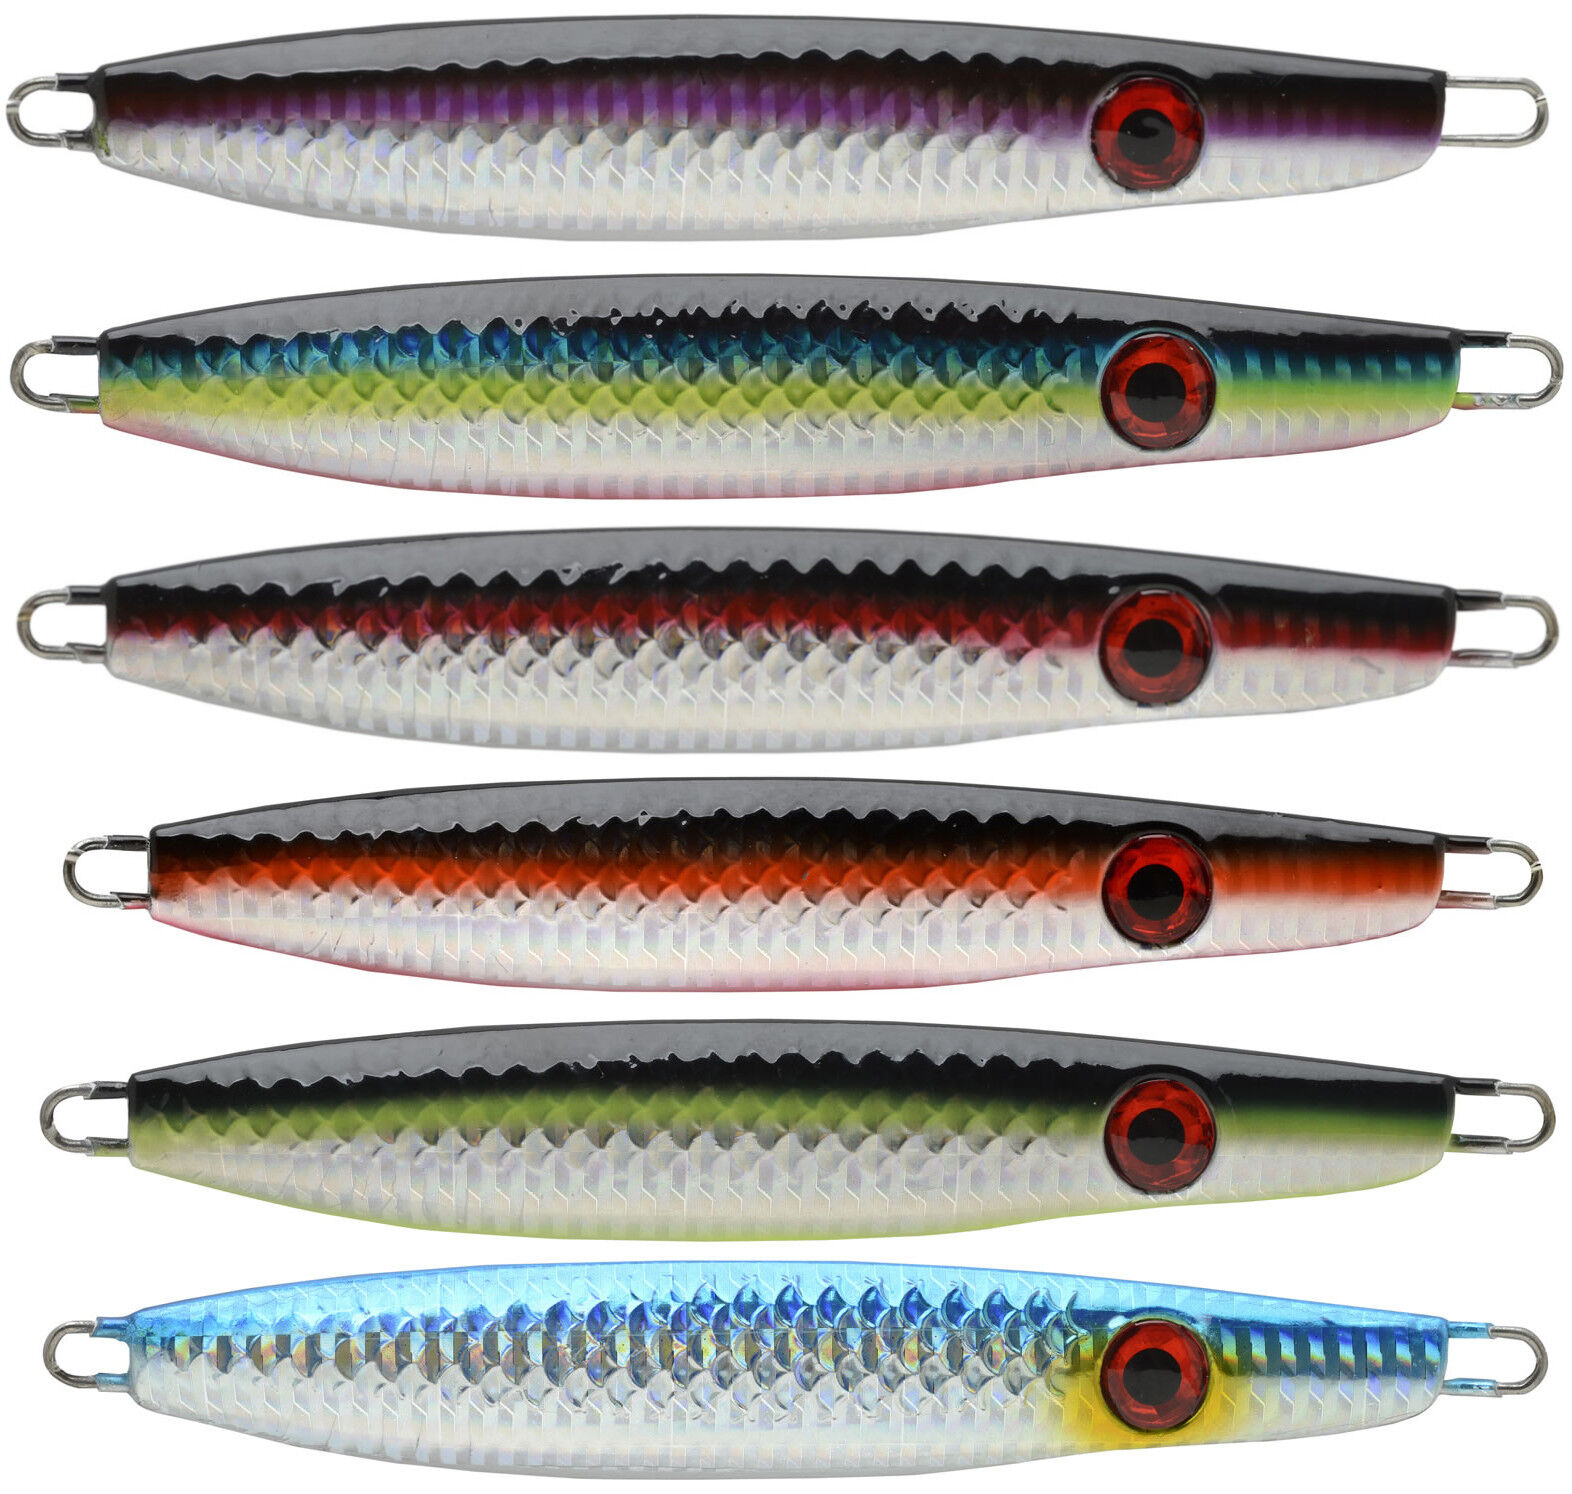 P-Line Sassin' Jig 3 Ounce Spoon-Style Jig Cod, Tuna, & Striper Fishing Lure